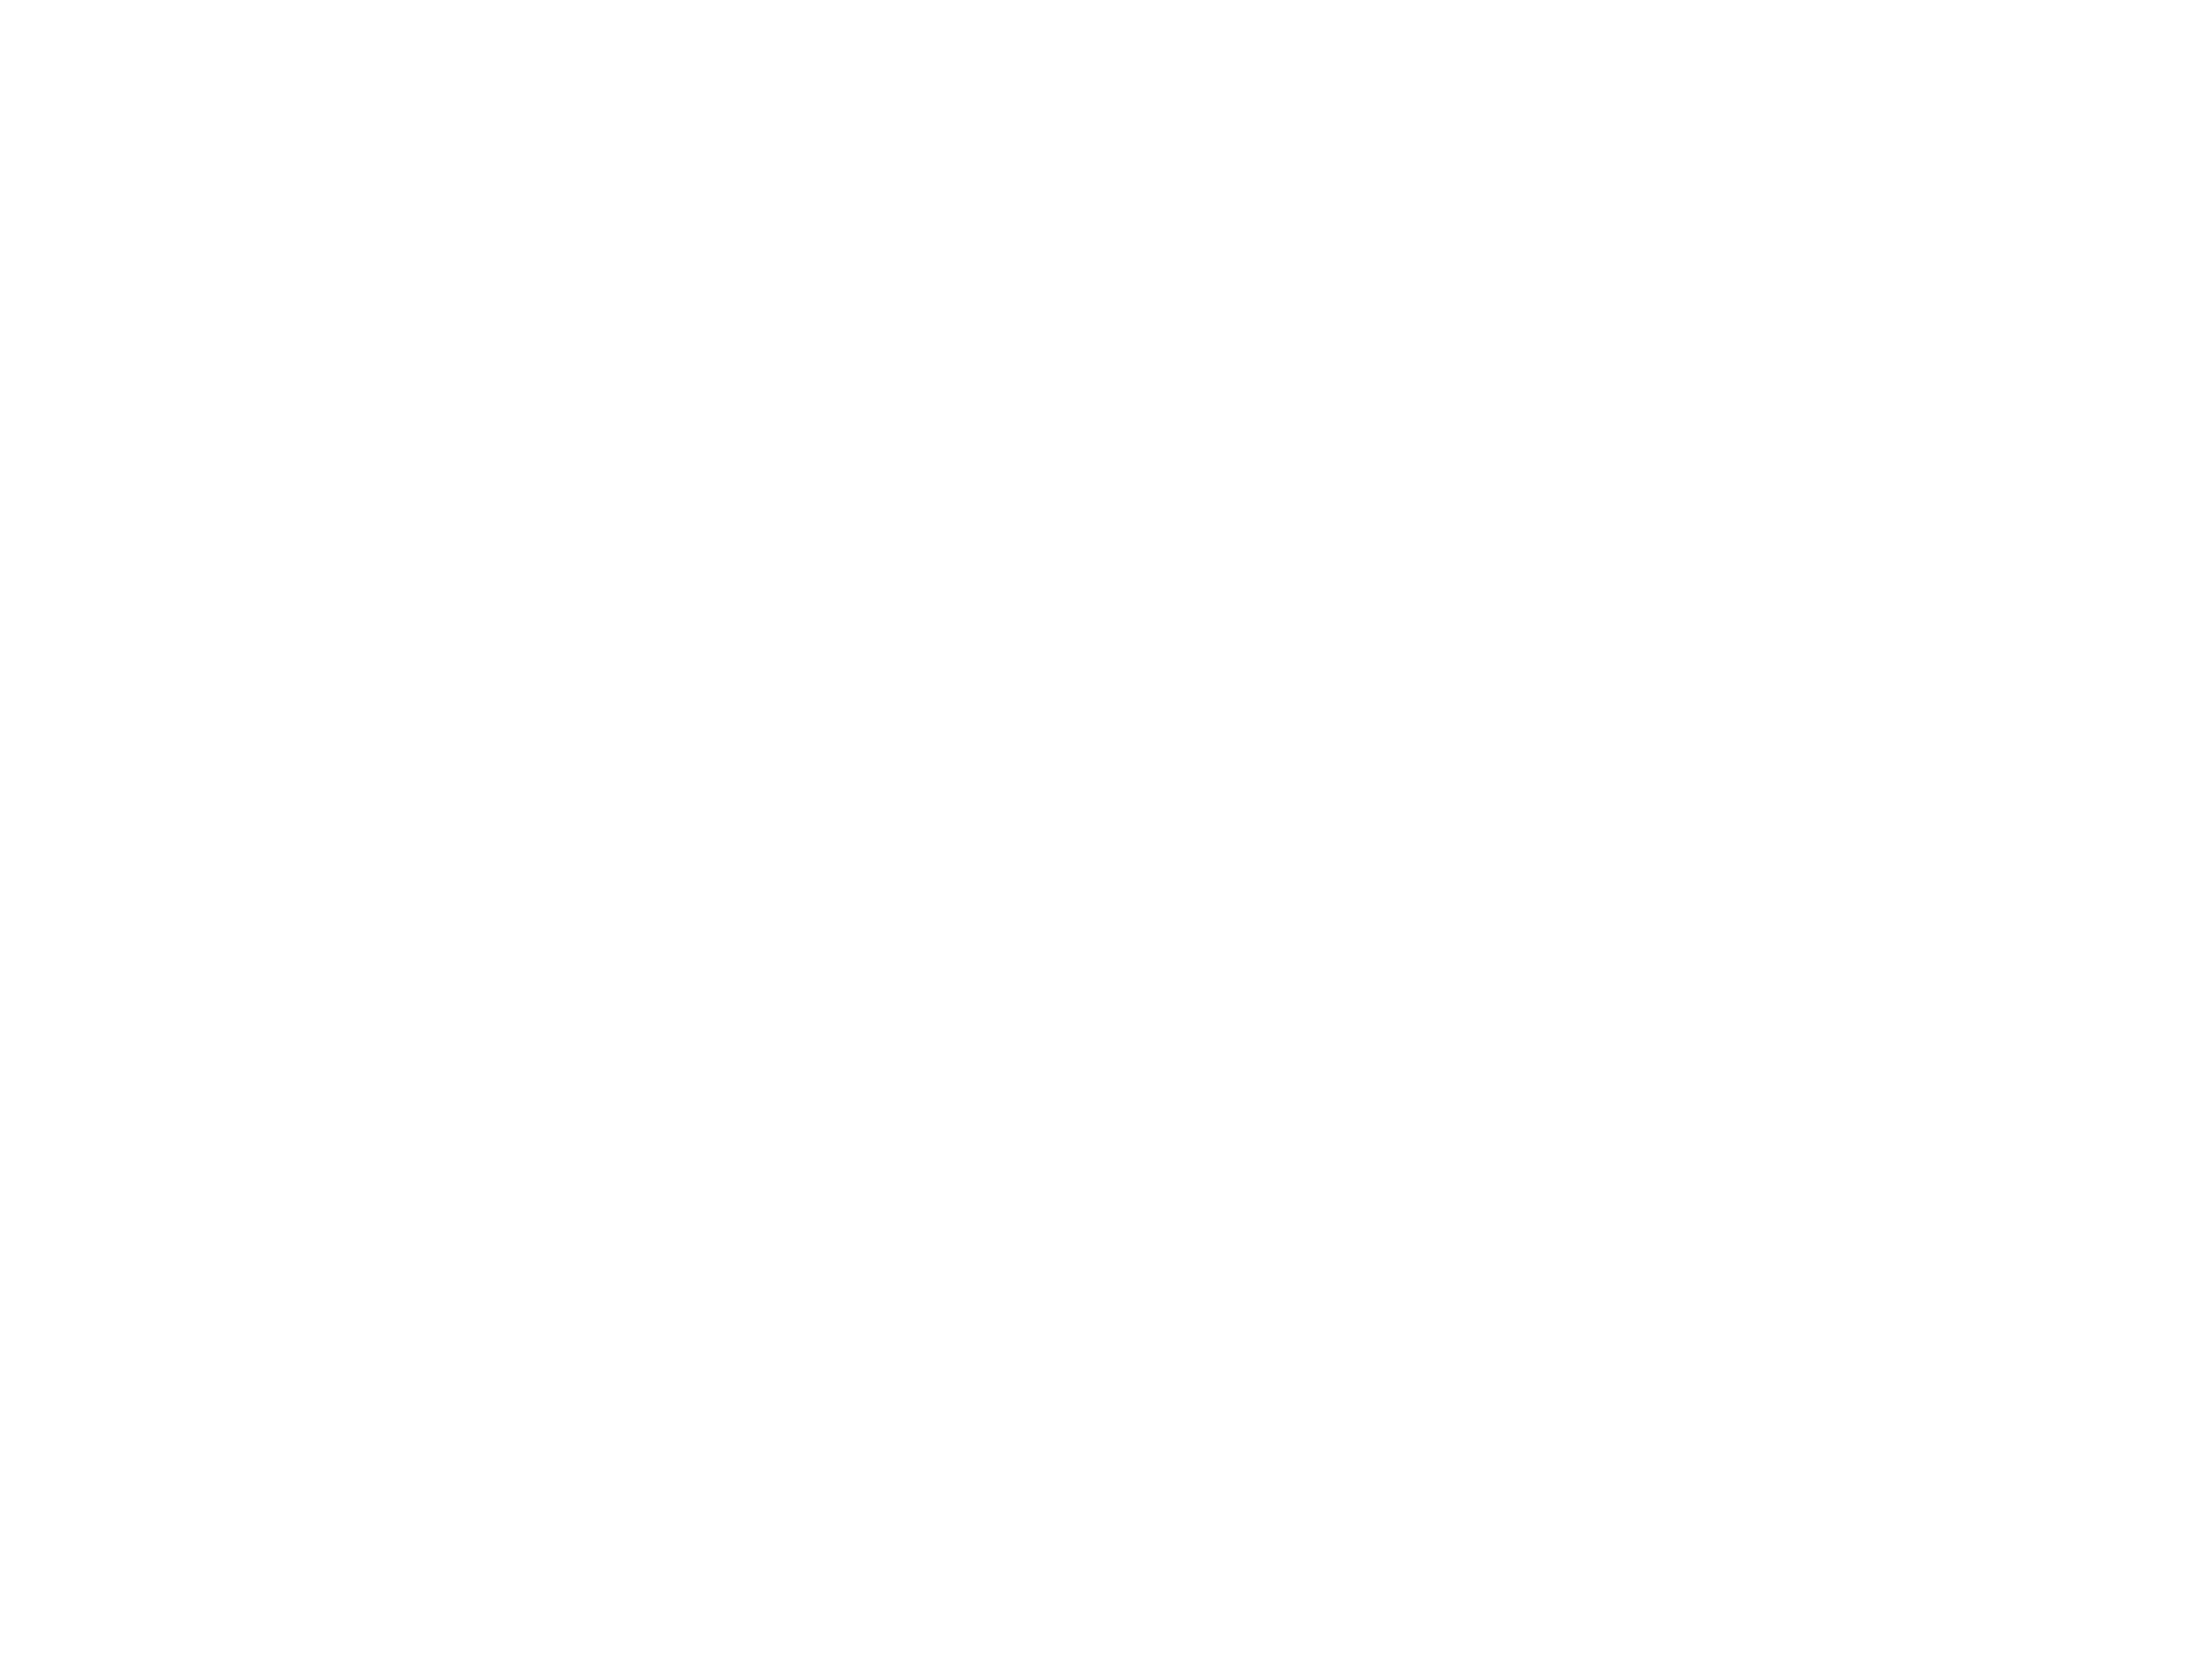 PRNEWS’ 2023 Agency Elite Top 100